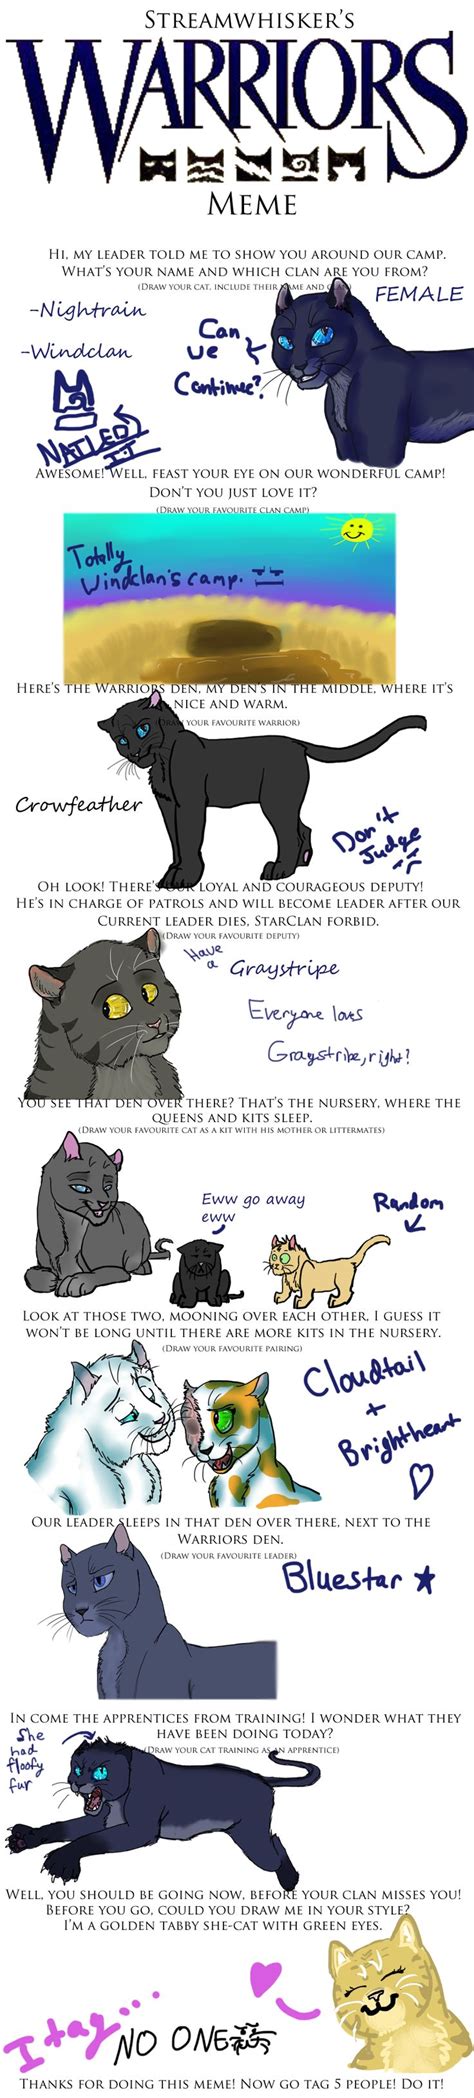 33 funny grumpy cat meme that make you laugh wishmeme. 48 best Warrior cat memes images on Pinterest | Warrior ...